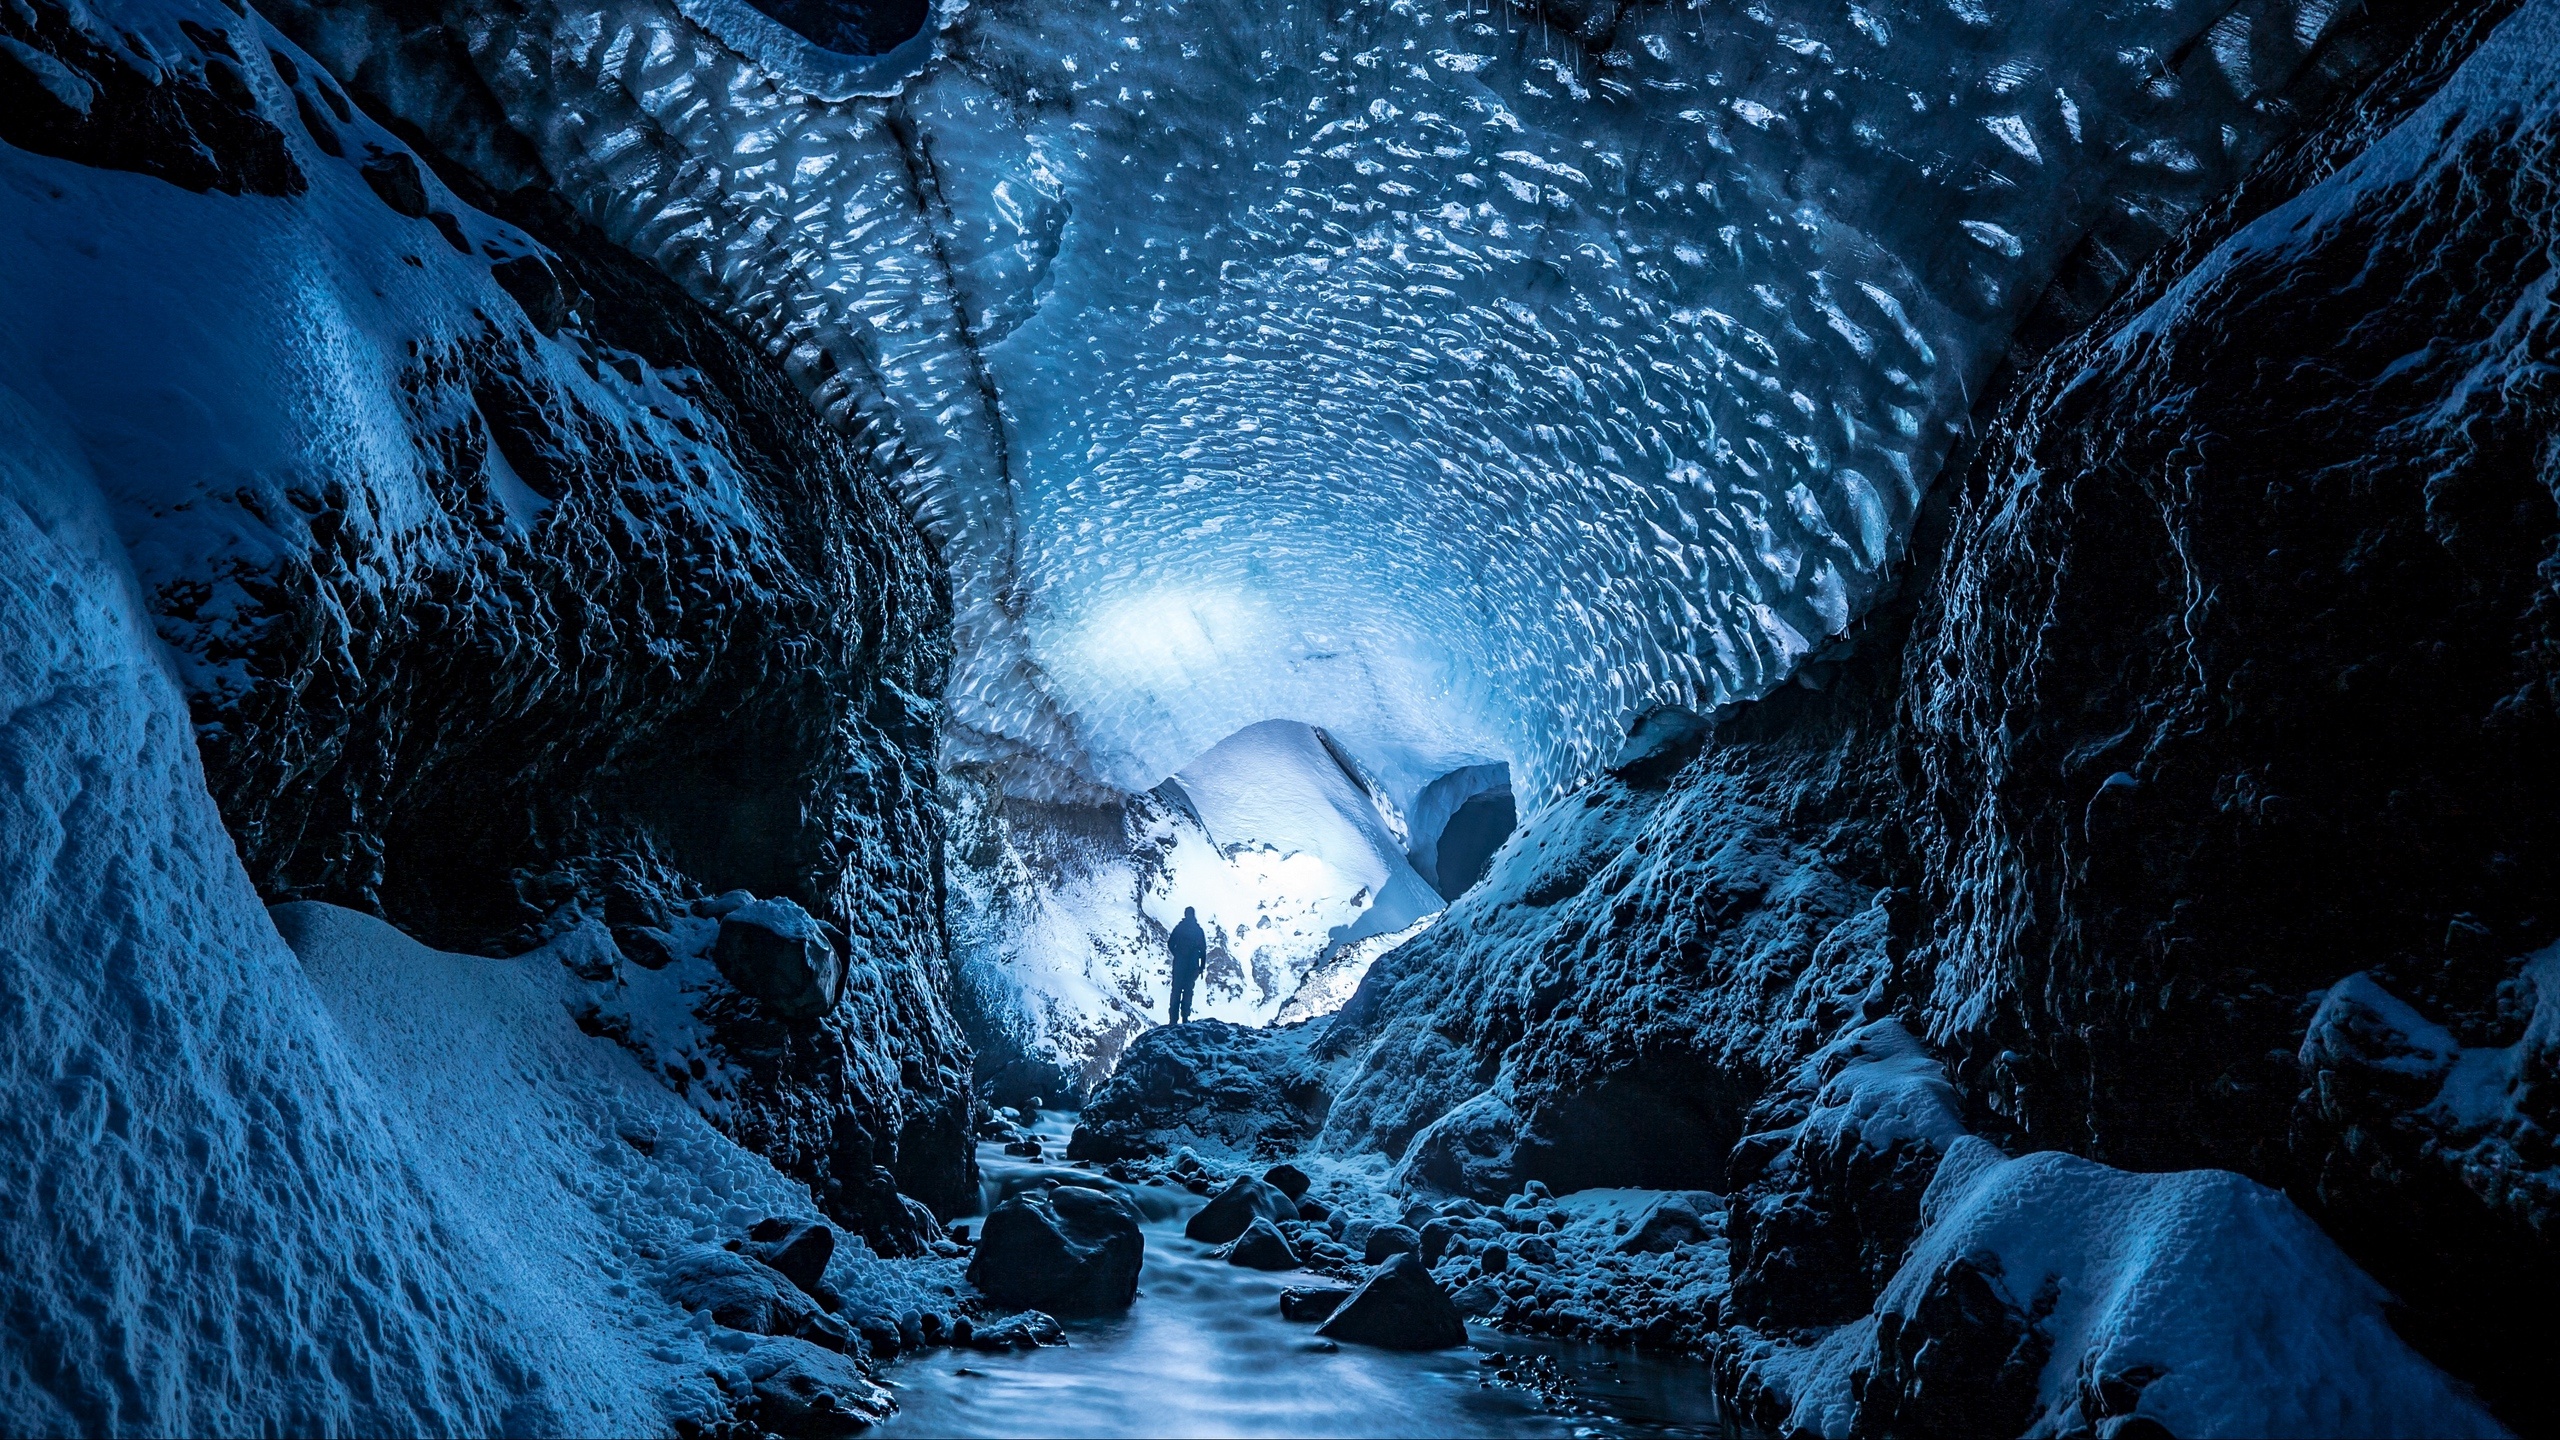 Breathtaking ice caves, Ryan Johnson's wallpaper share, Nature's beauty, 2560x1440 HD Desktop